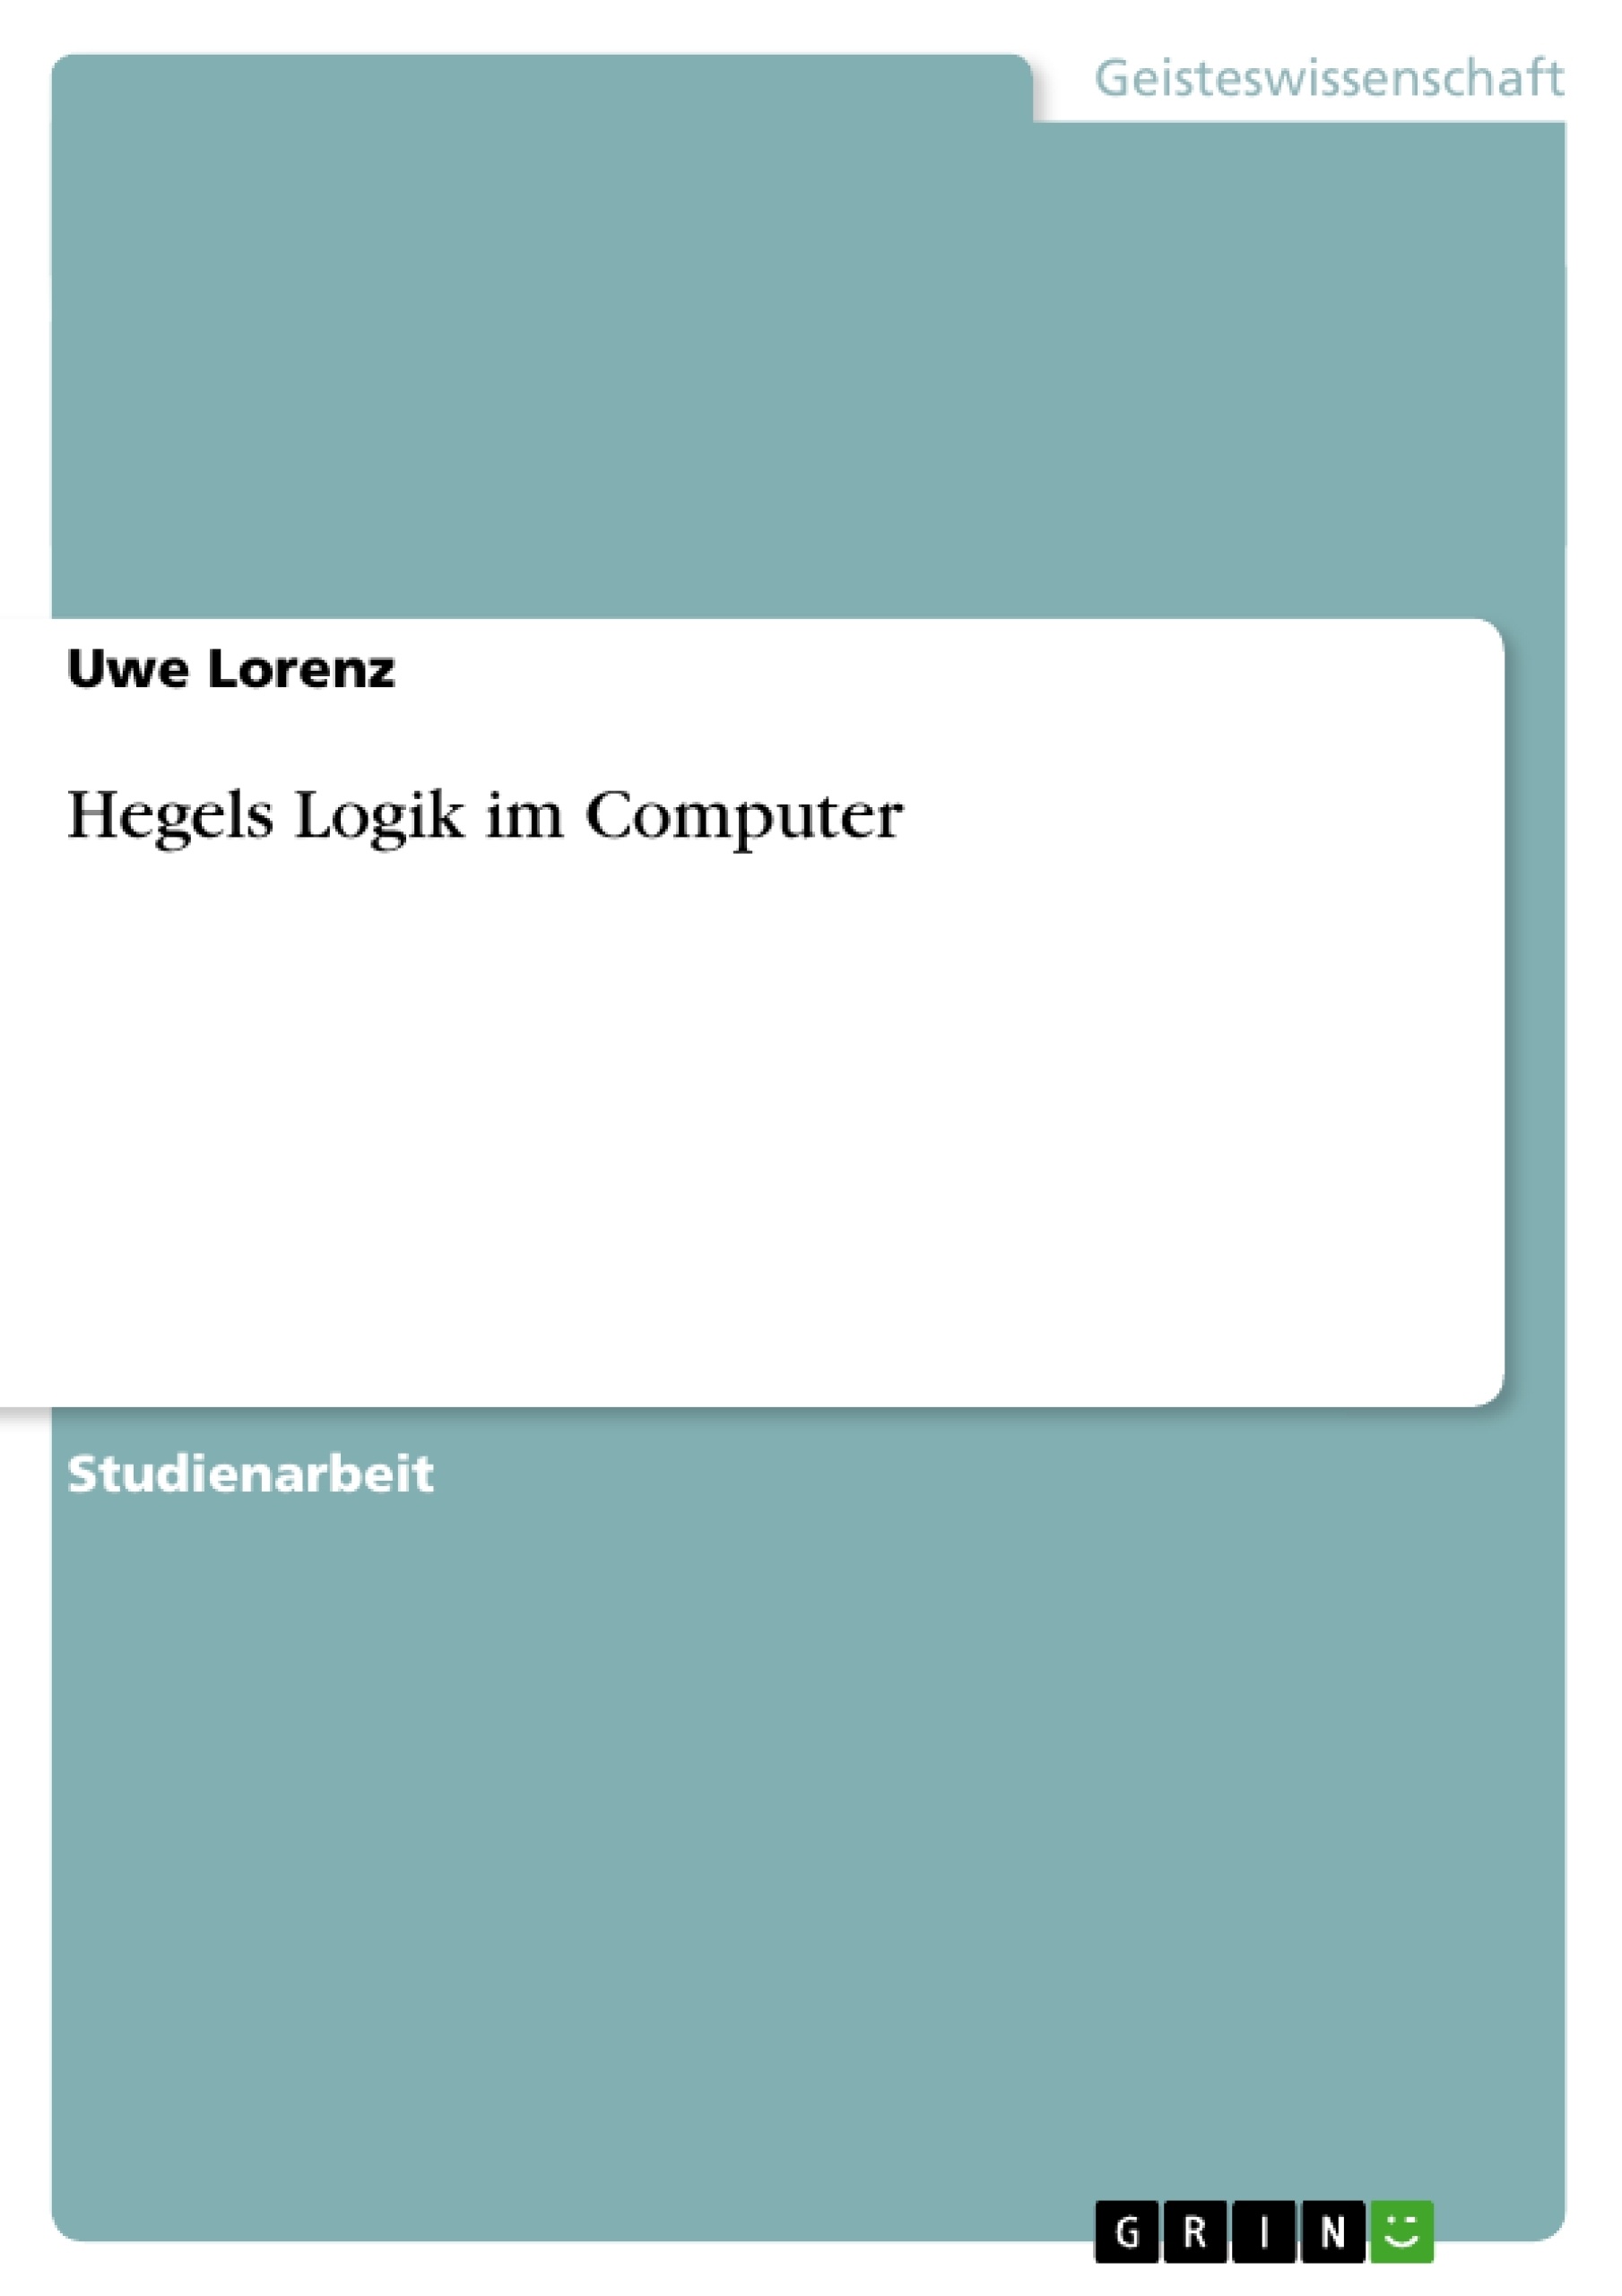 Titre: Hegels Logik im Computer